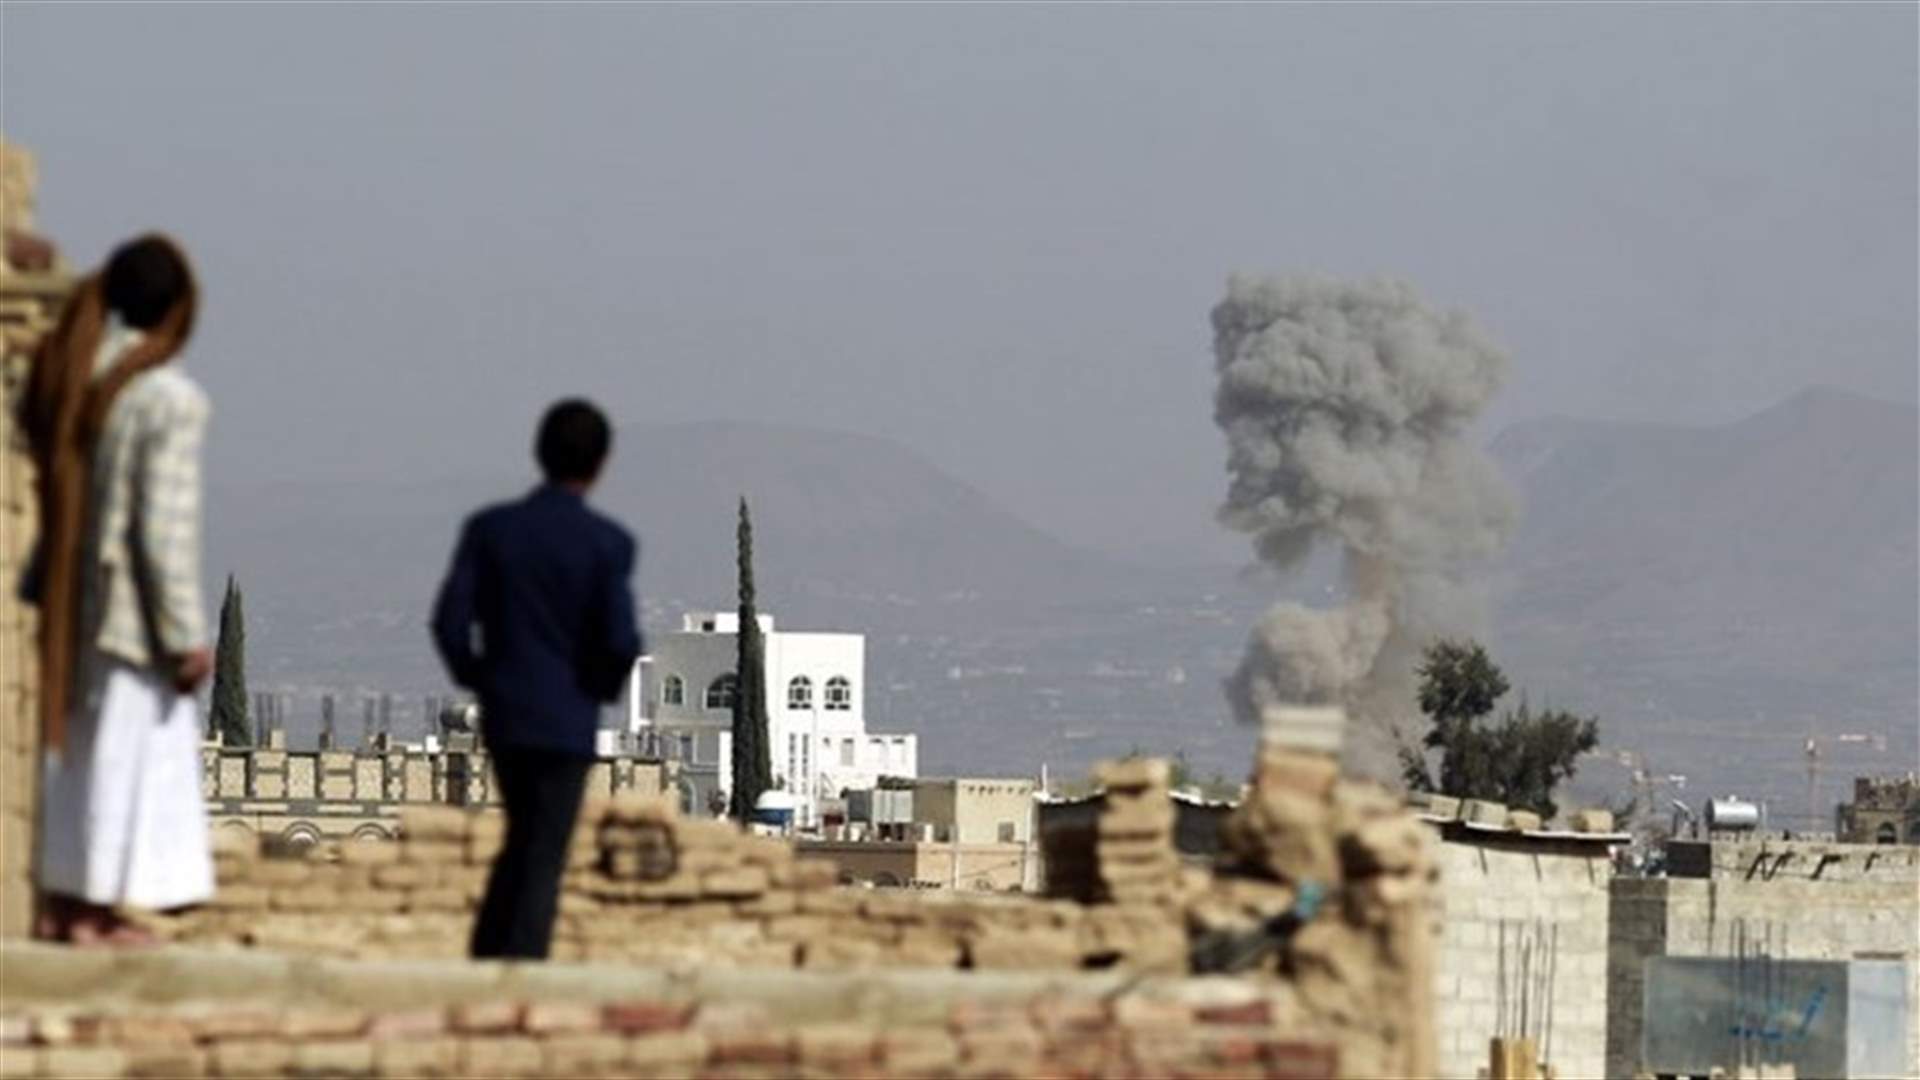 Raids kill nine in central Yemen - medical official, residents